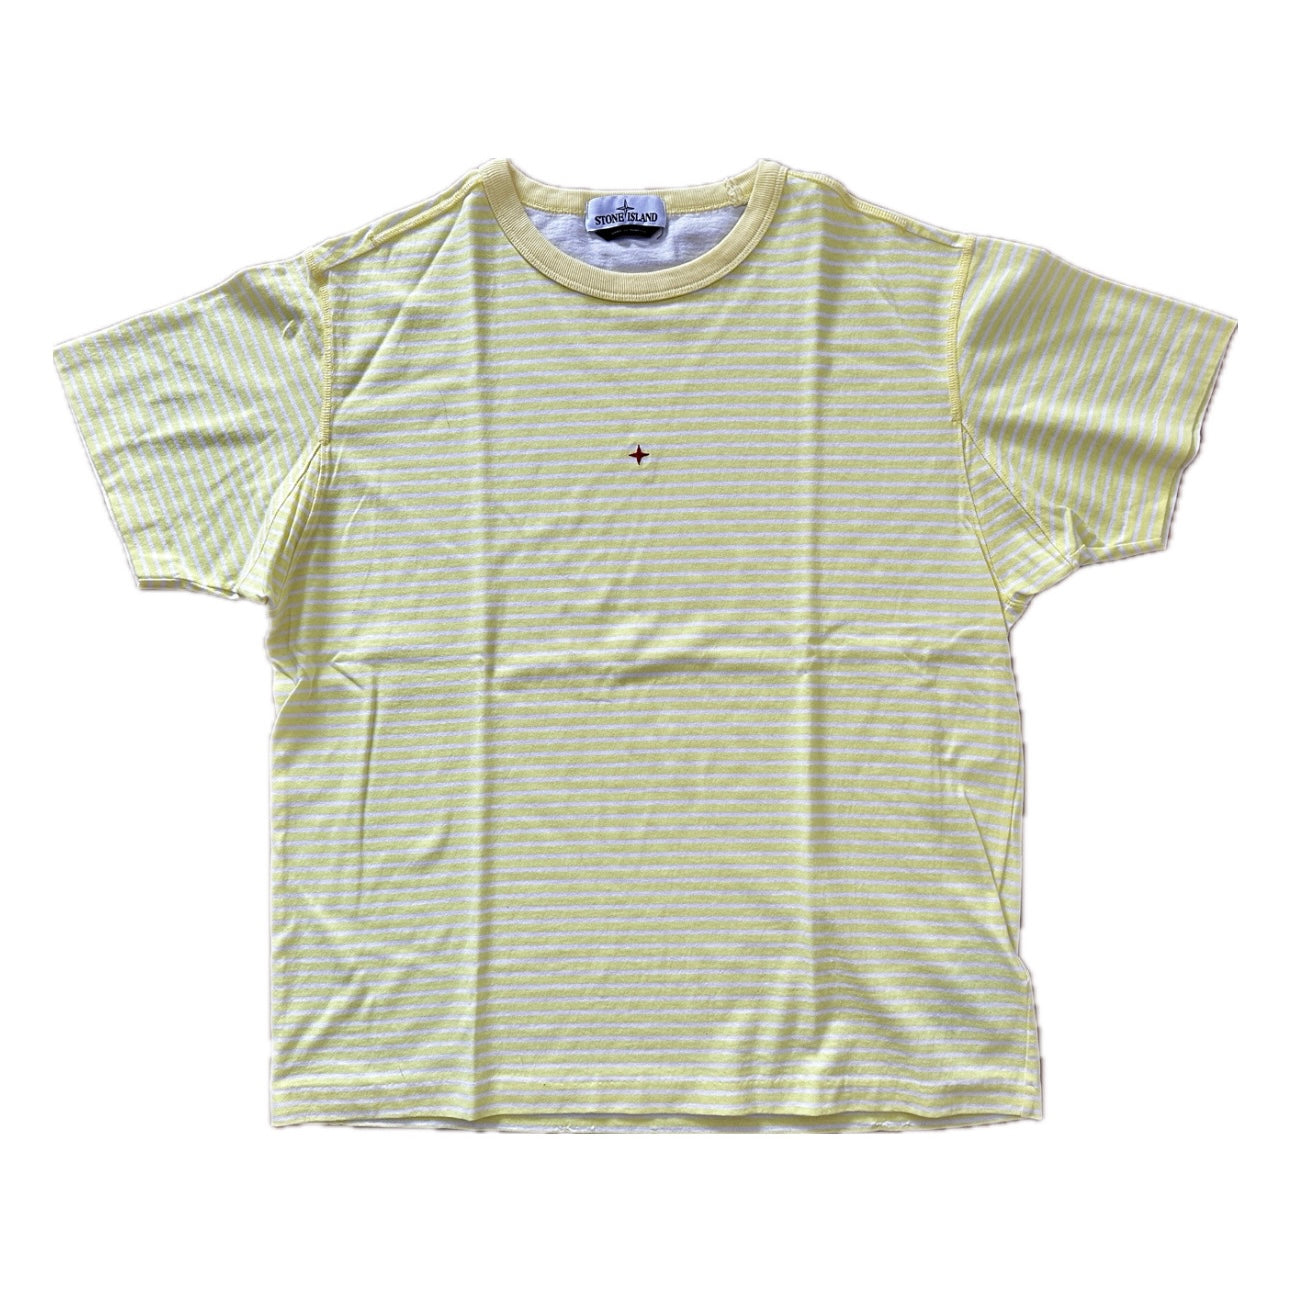 Stone Island Marina 2019 Lemon T-Shirt - XL